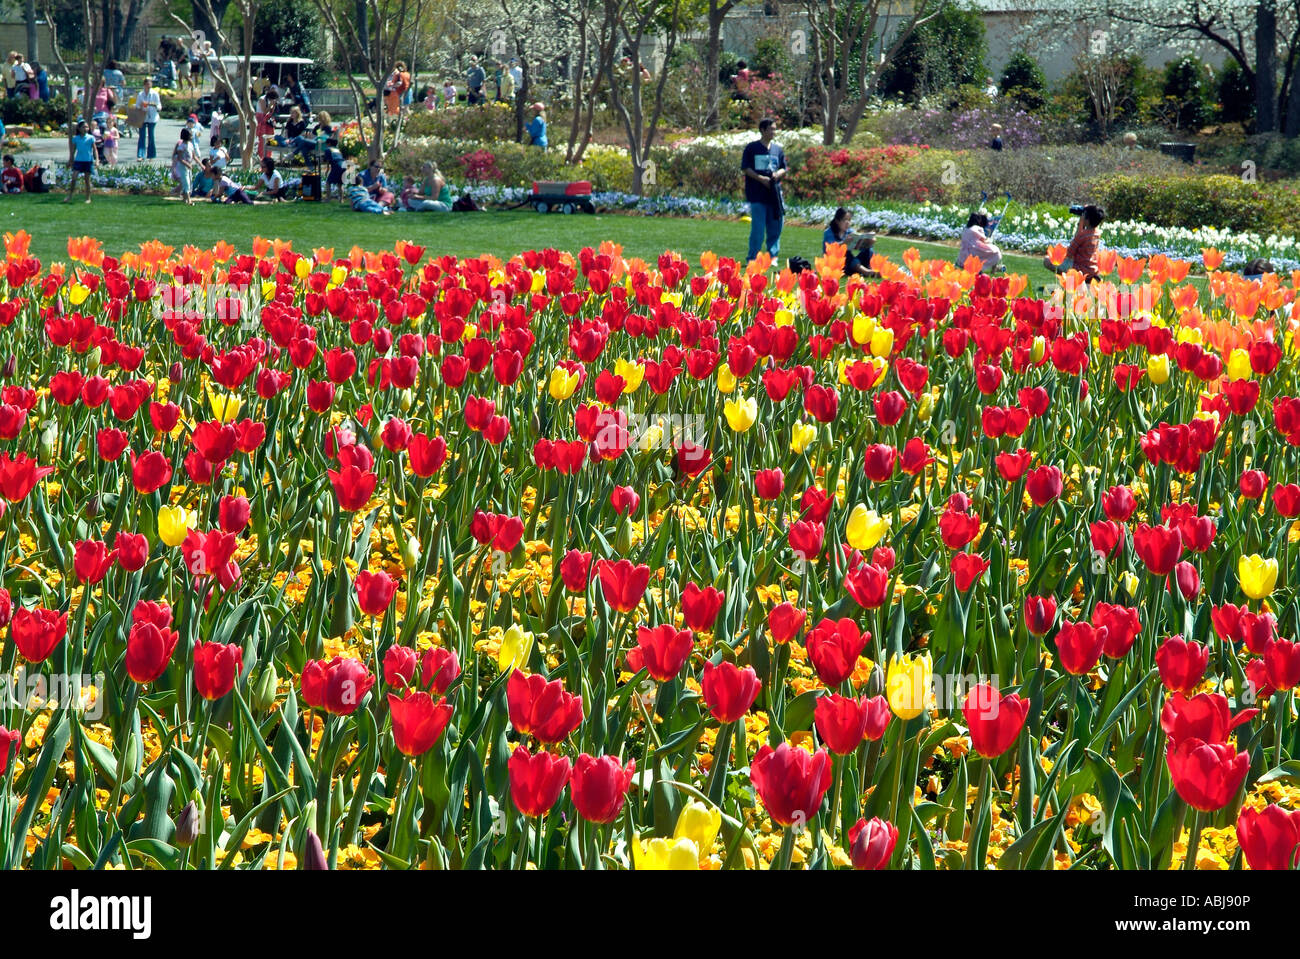 Field Of Tulips In The Dallas Arboretum Park Stock Photo 12904533